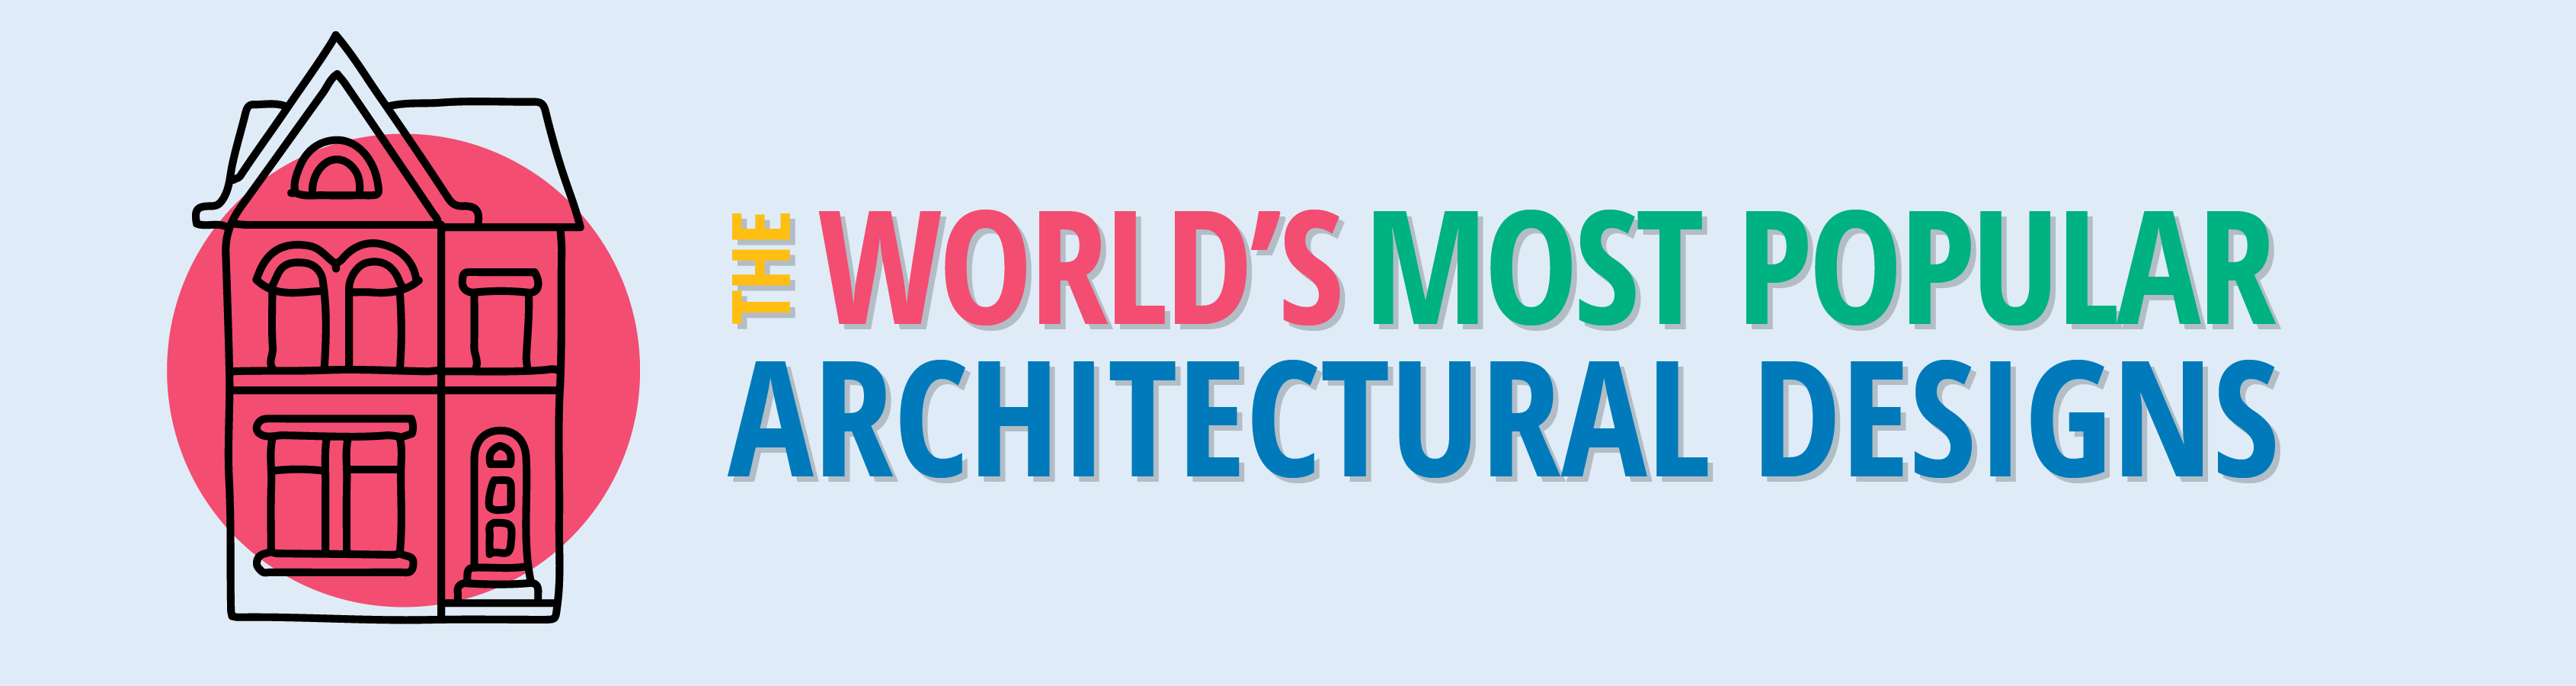 The worlds most popular architectural designs header